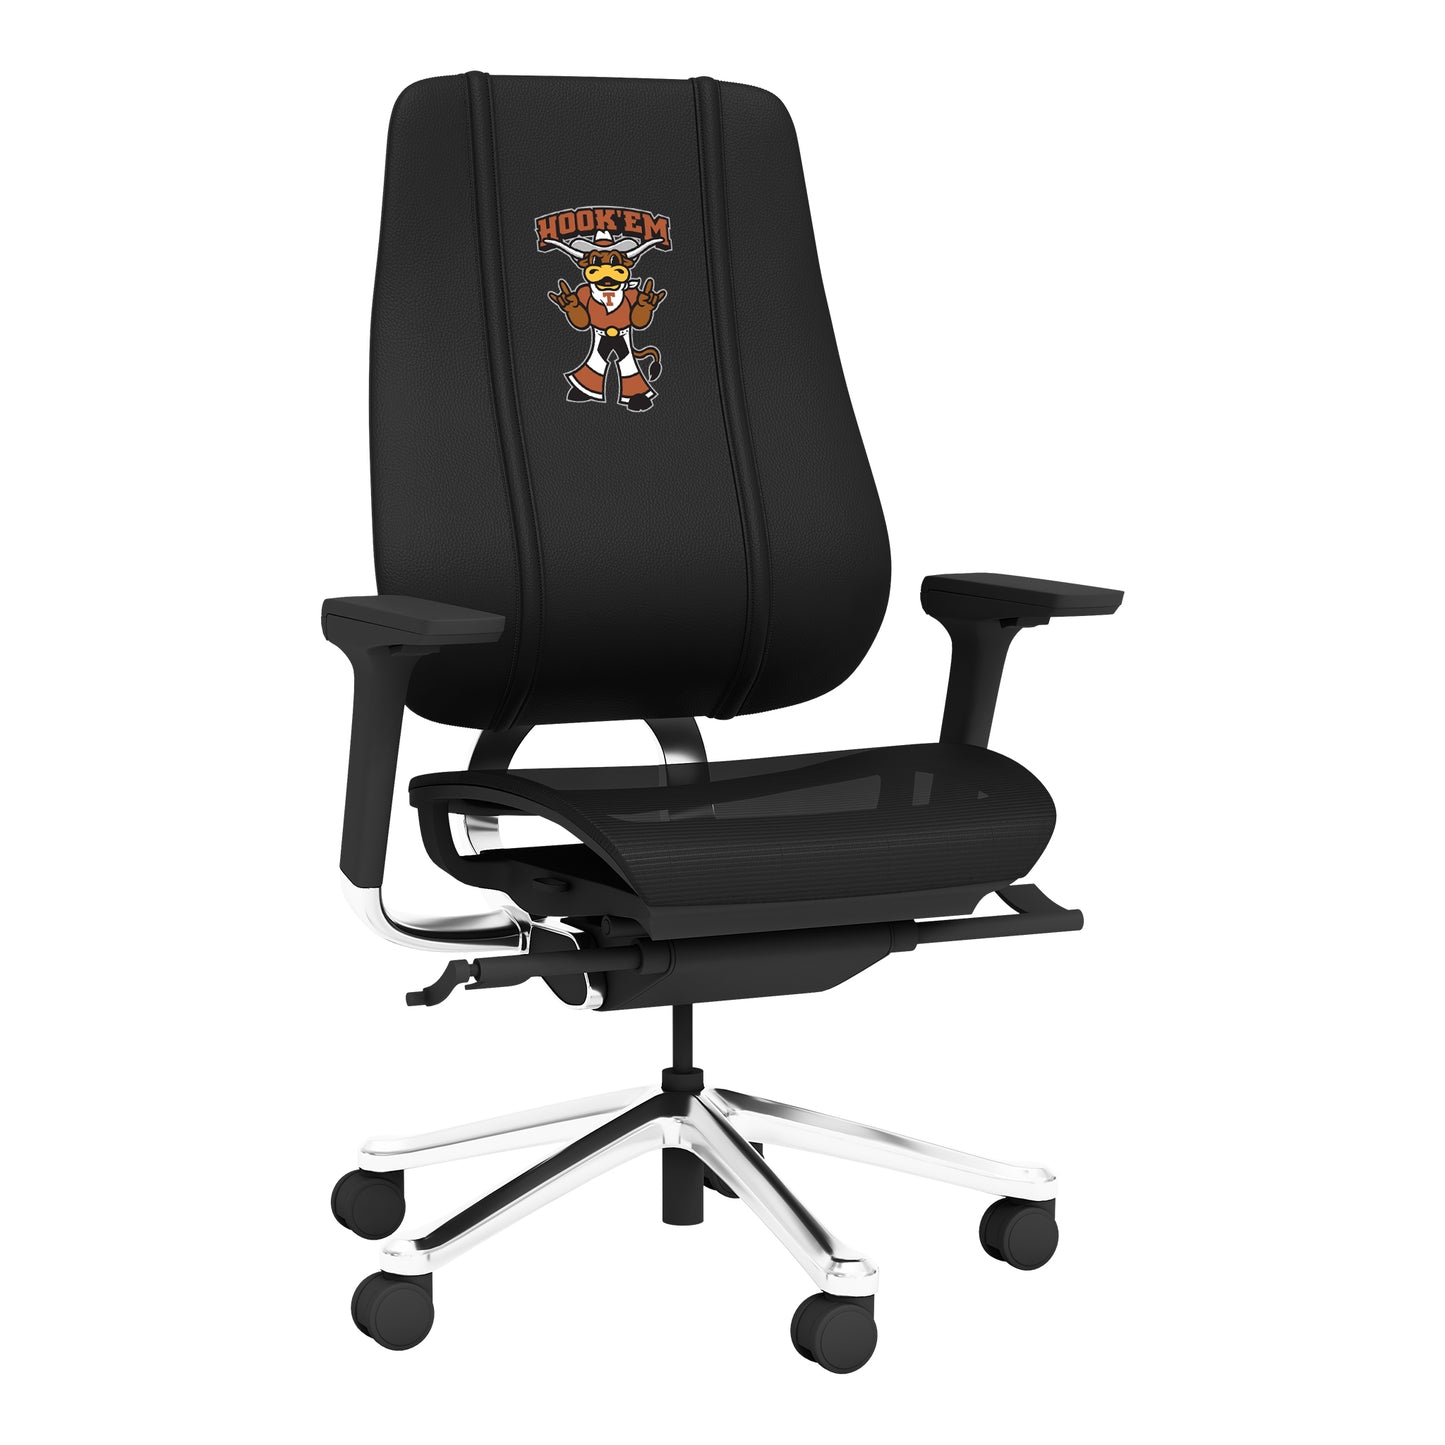 PhantomX Gaming Chair with Texas Longhorns Alternate